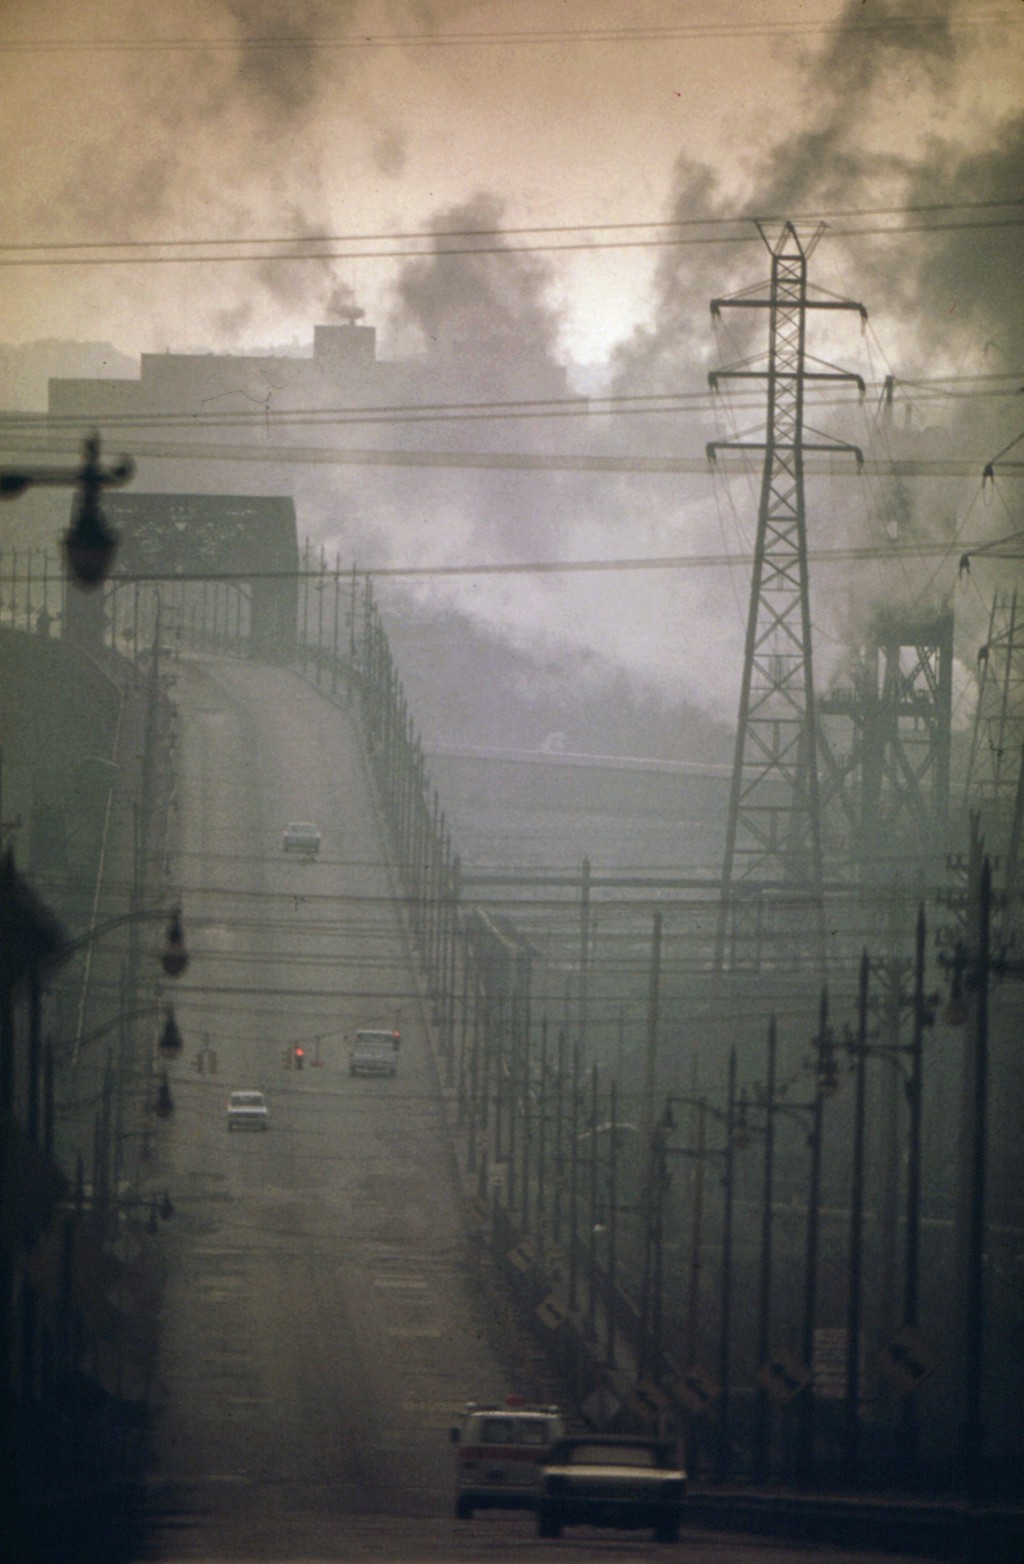 Dark Clouds of Factory Smoke Obscure Clark Avenue Bridge